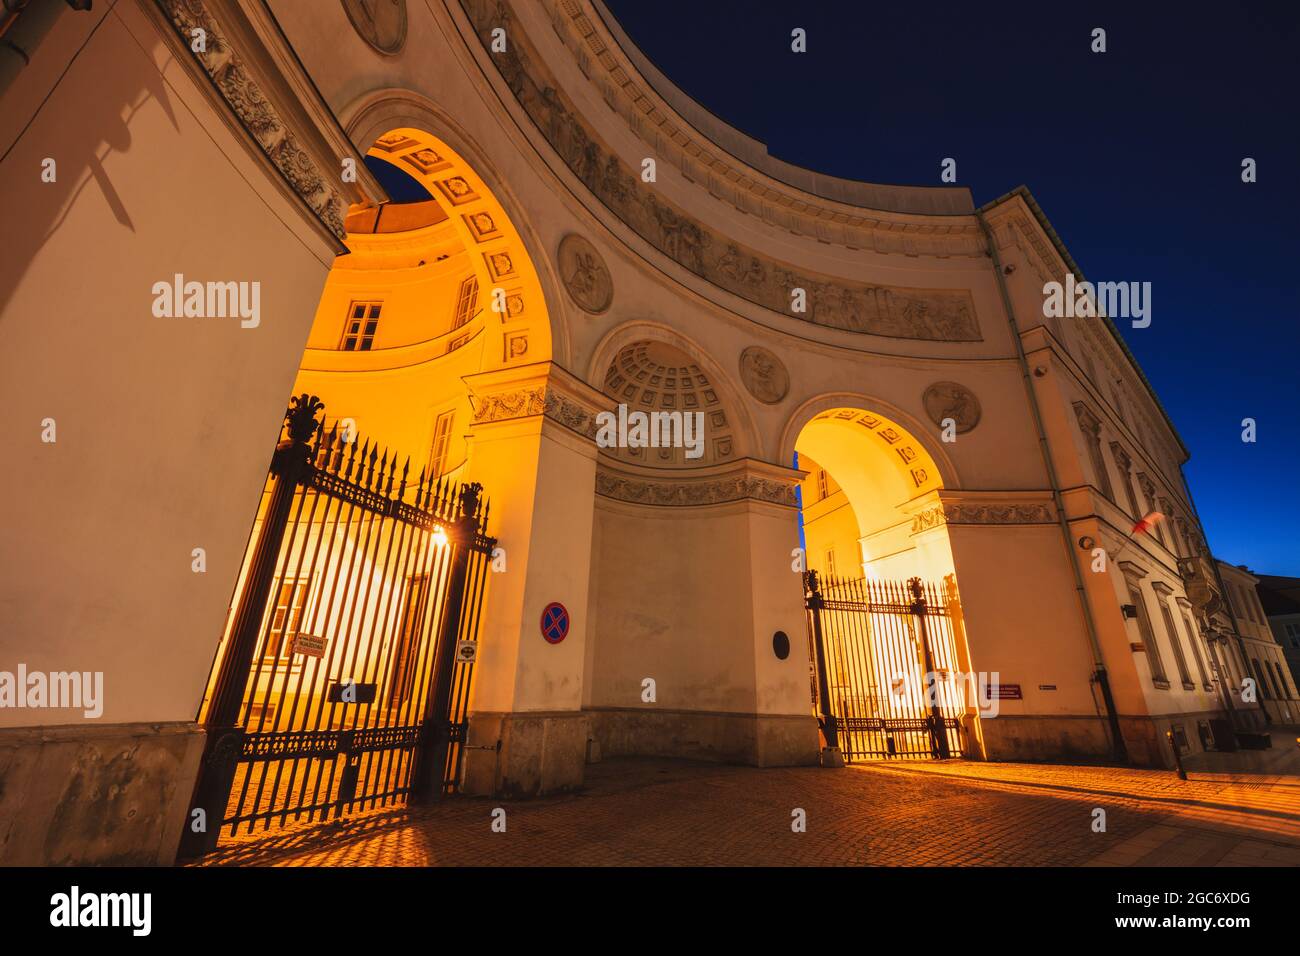 Poland, Masovia, Warsaw, Illuminated historical buildings at night Stock Photo